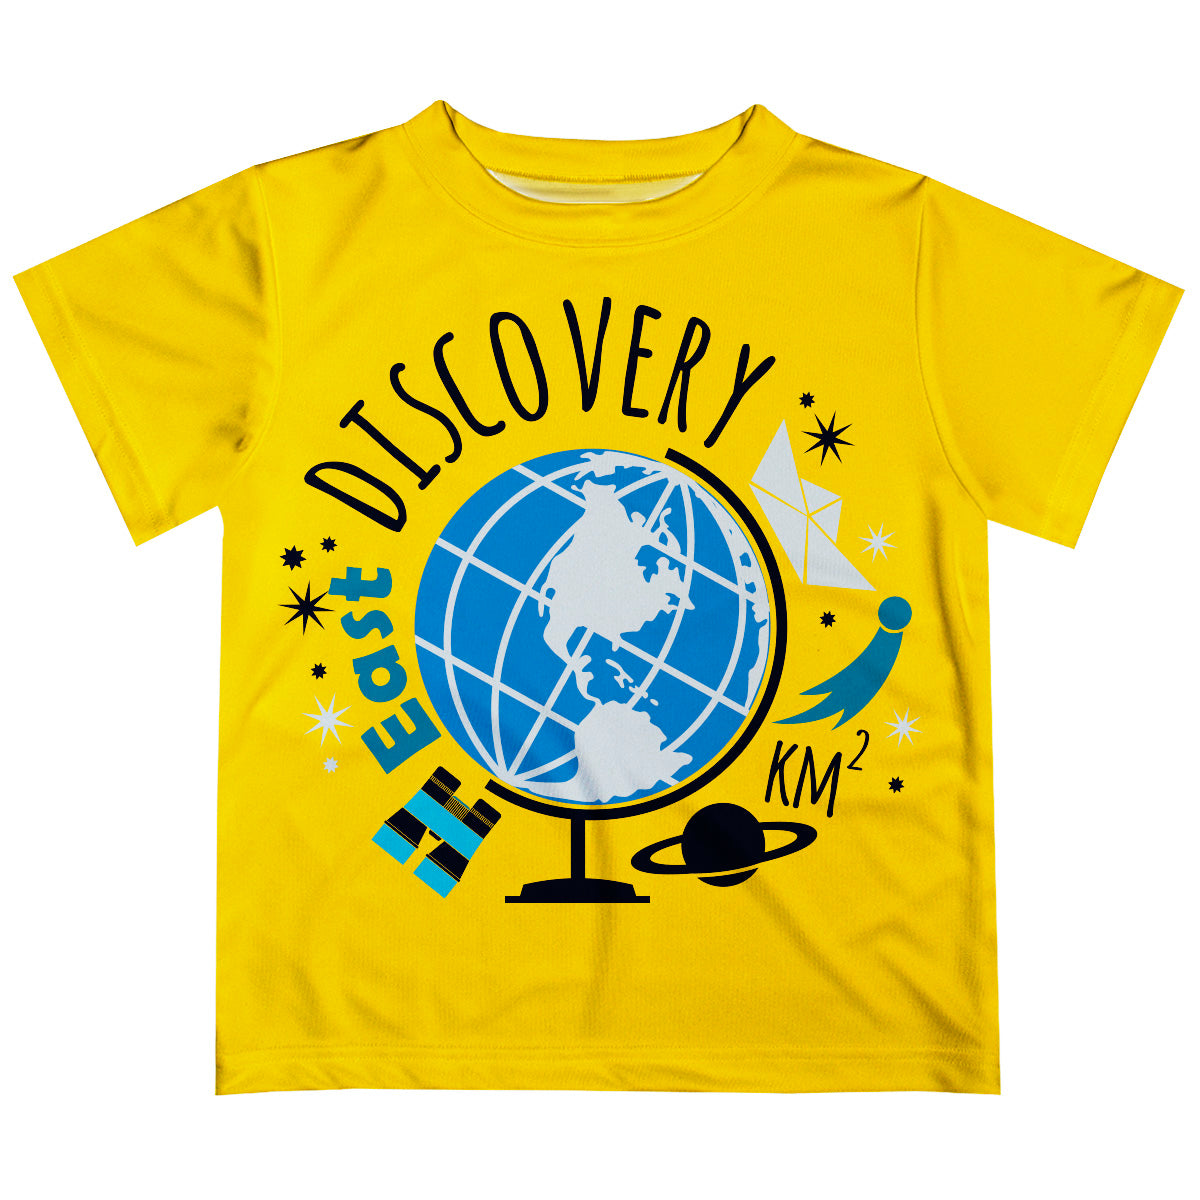 Discovery Yellow Short Sleeve Tee Shirt